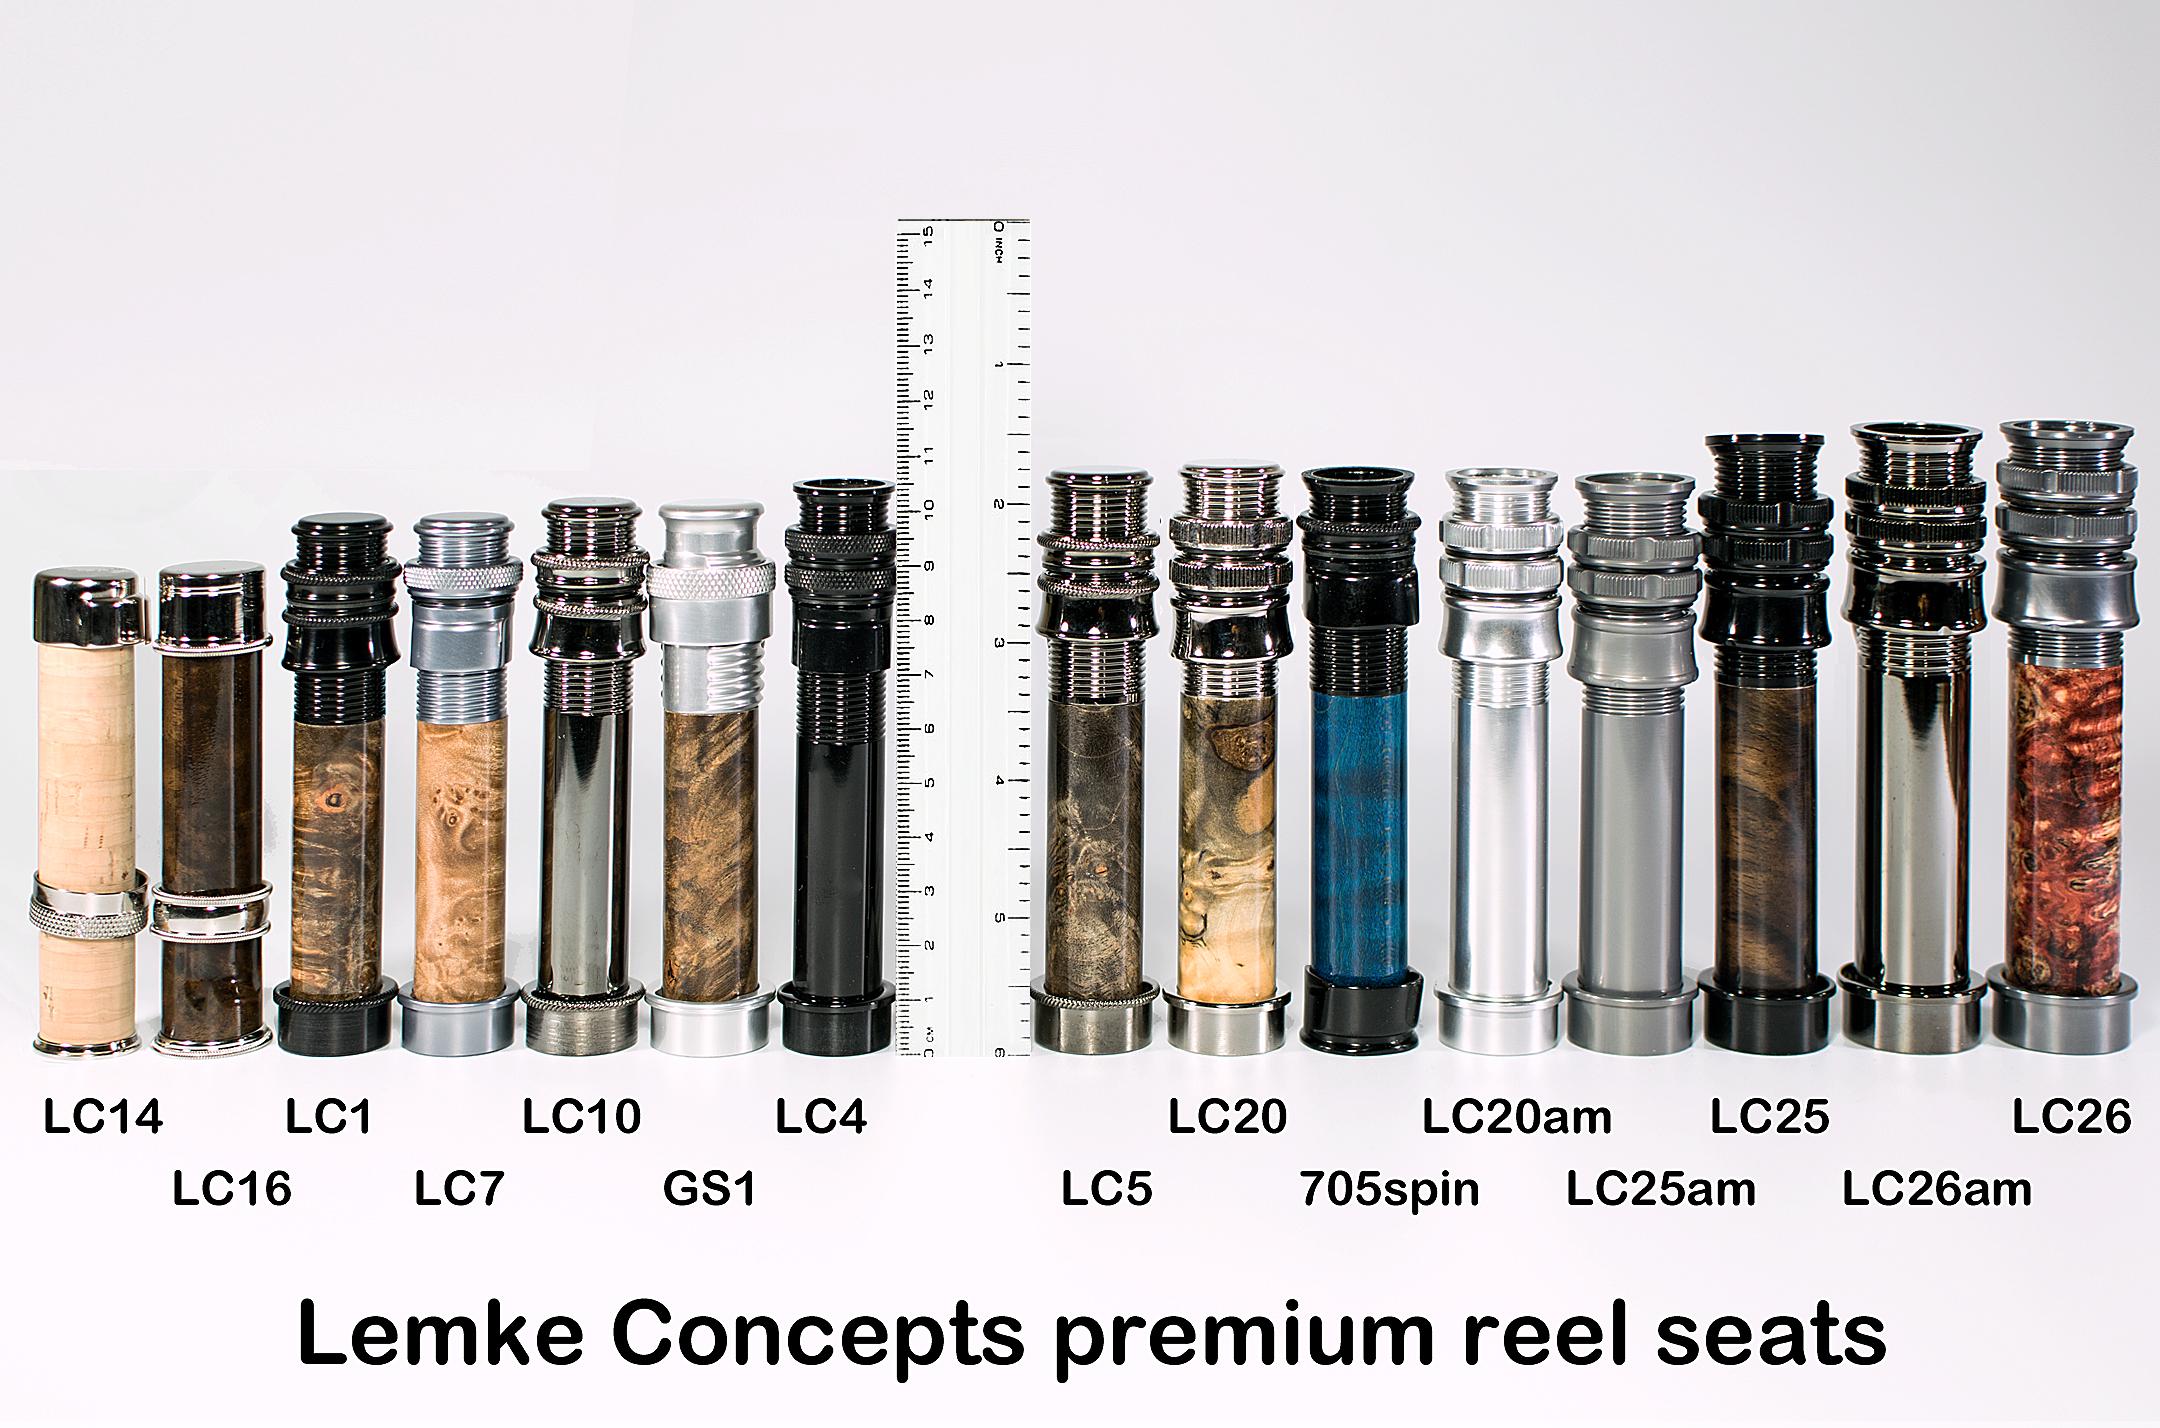 Lemke Concepts reel seat family